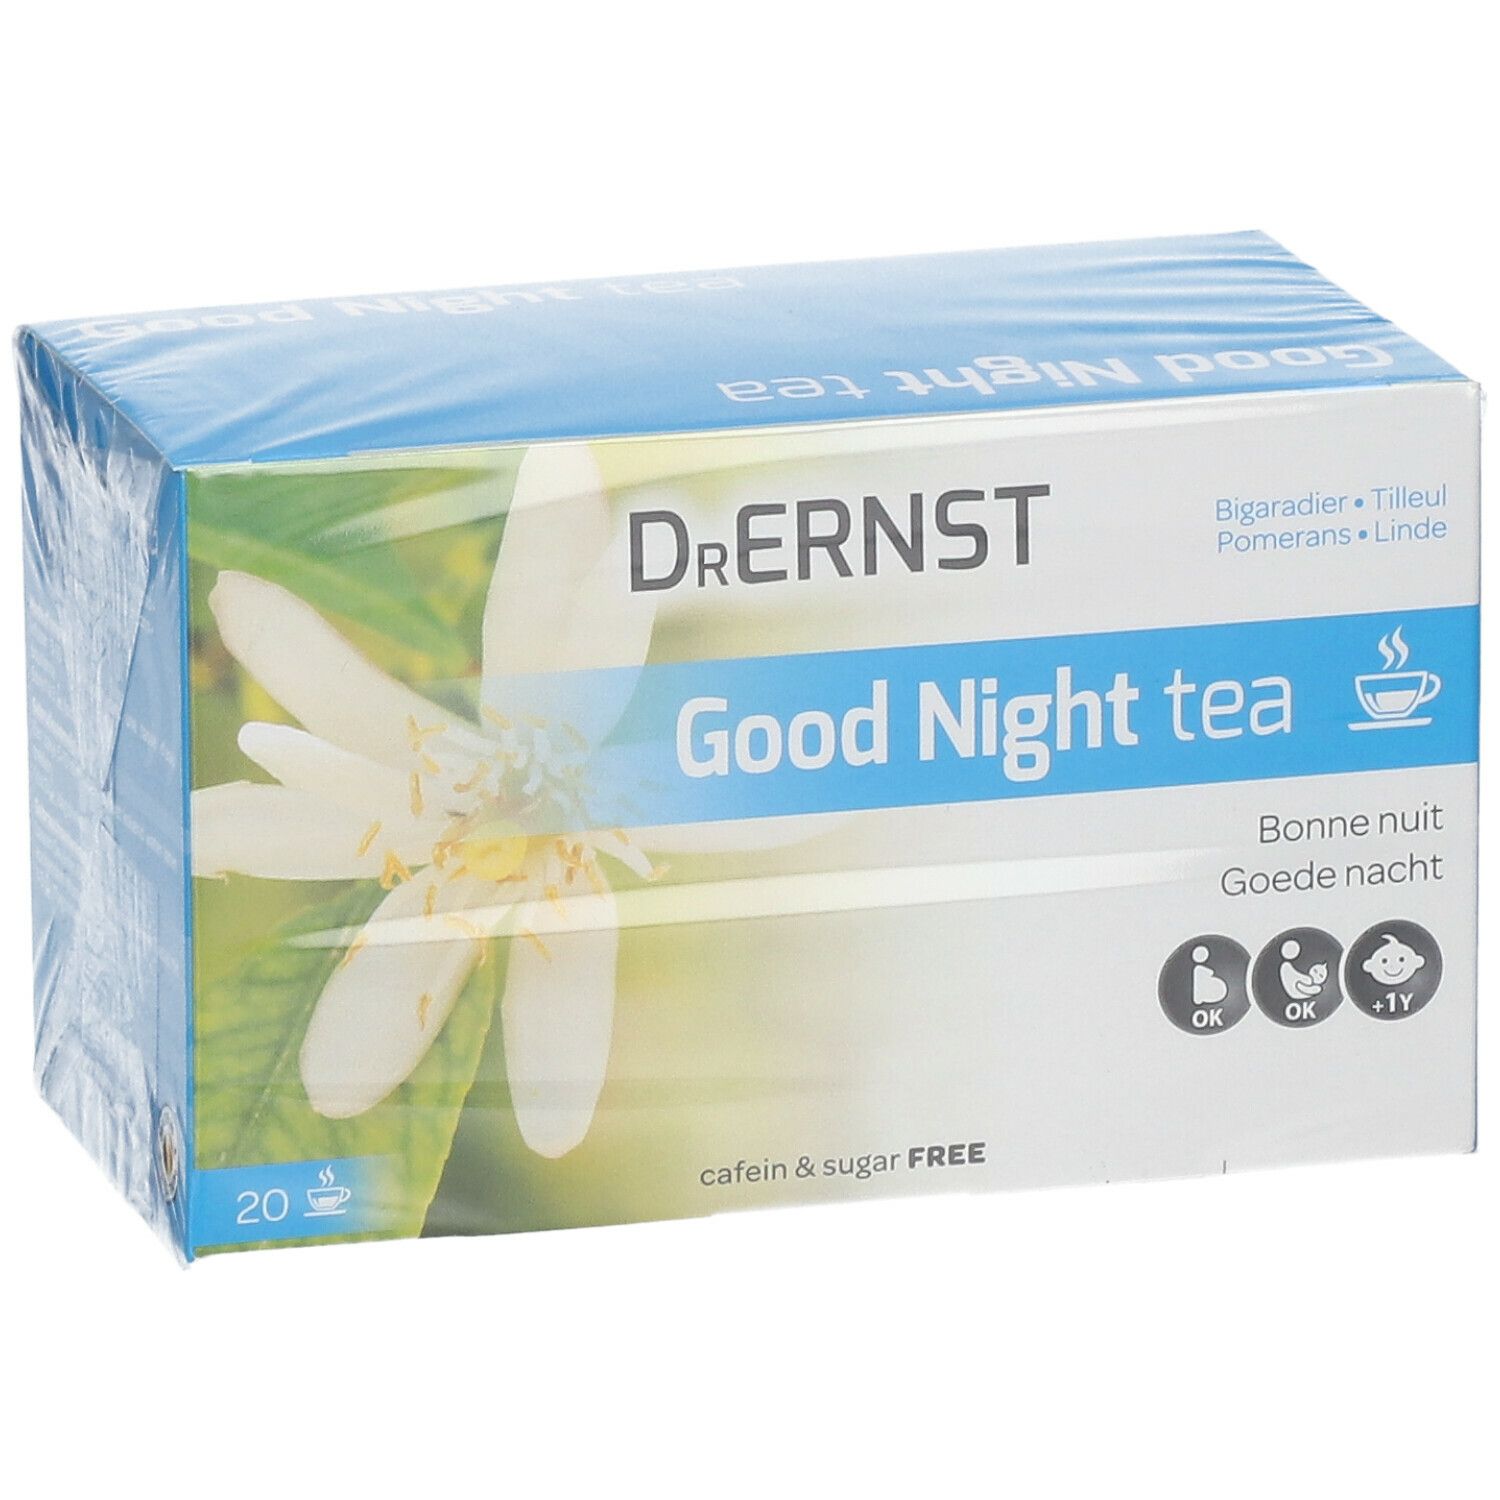 Dr ERNST Good Night Tea